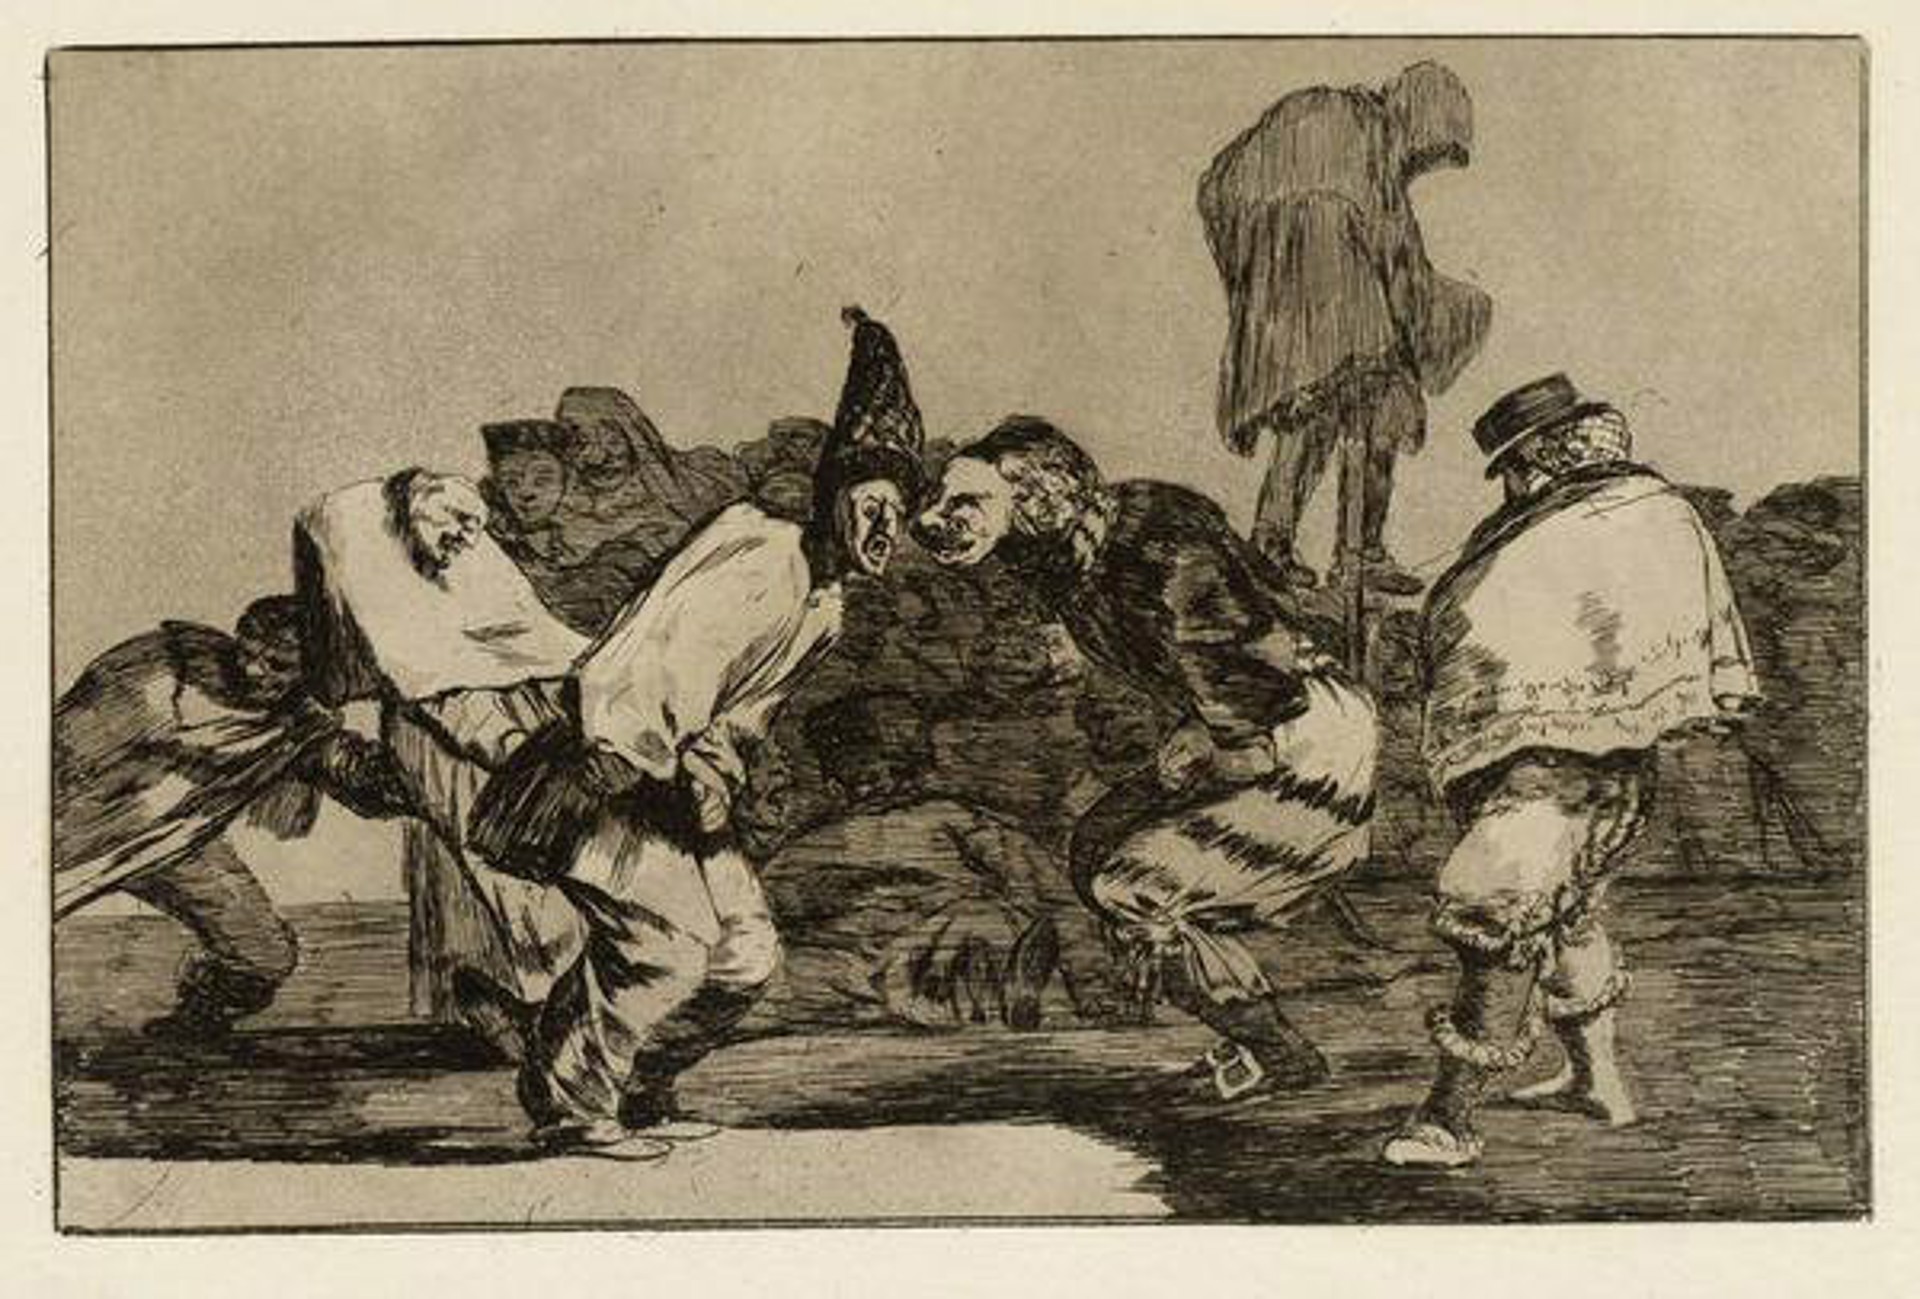 Alegris Antruejo Que Mañana Seras Ceniza (Rejoice, Carnival, for Tomorrow Thou Wilt be Ashes) by Francisco Goya